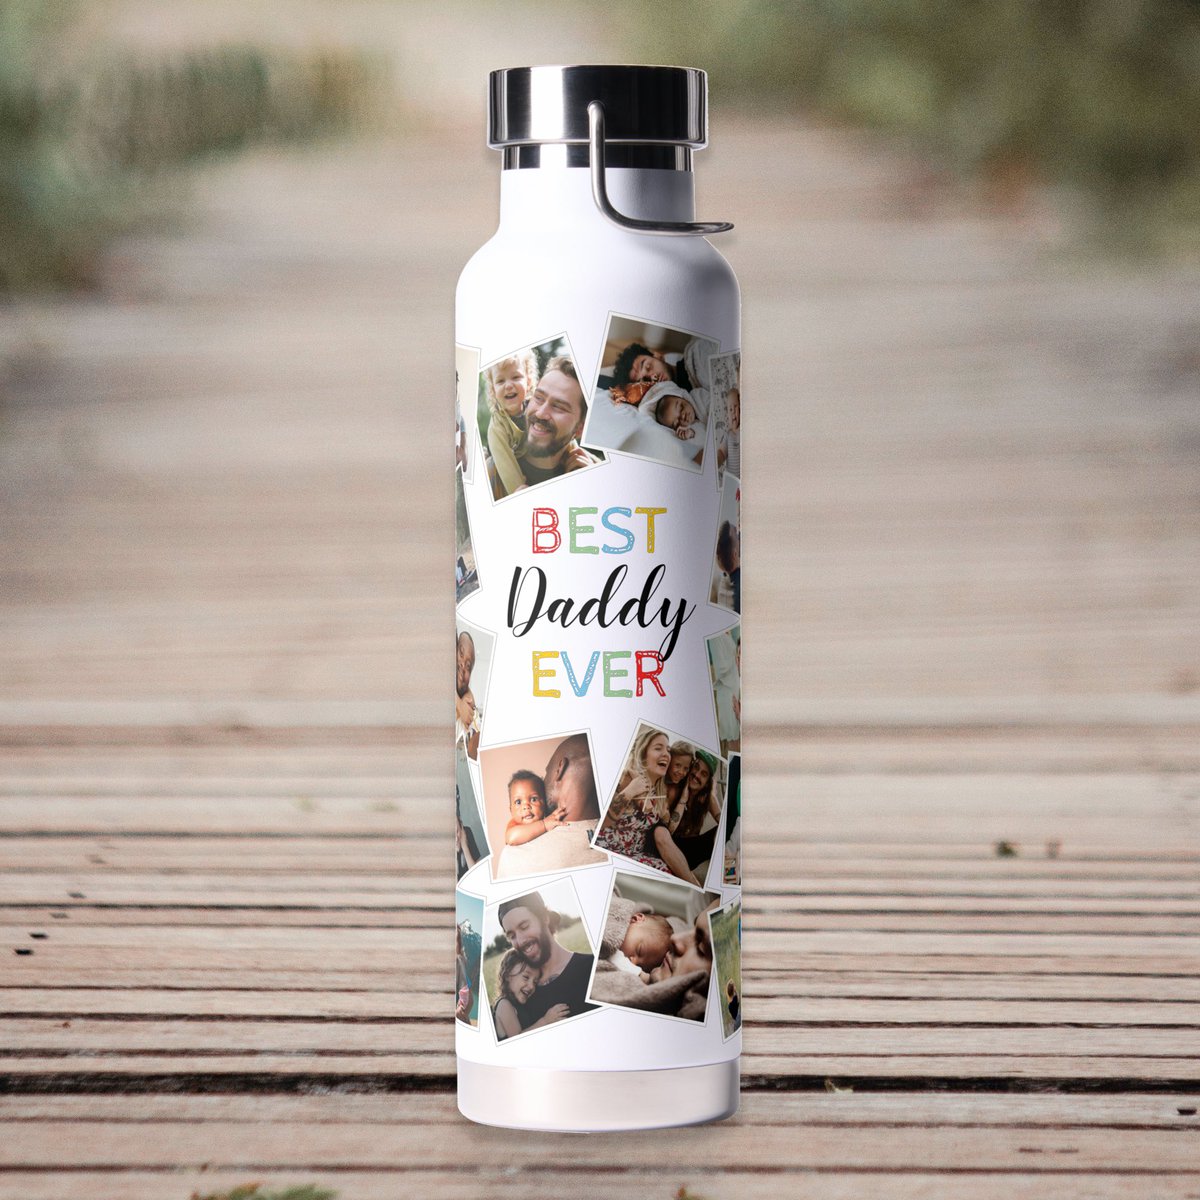 Best Daddy Ever Photo Collage Water Bottle

zazzle.com/best_daddy_eve… via @zazzle

#bestdadever #fathersday #dadwaterbottle #uniquedadgift #photogift #zazzlemade